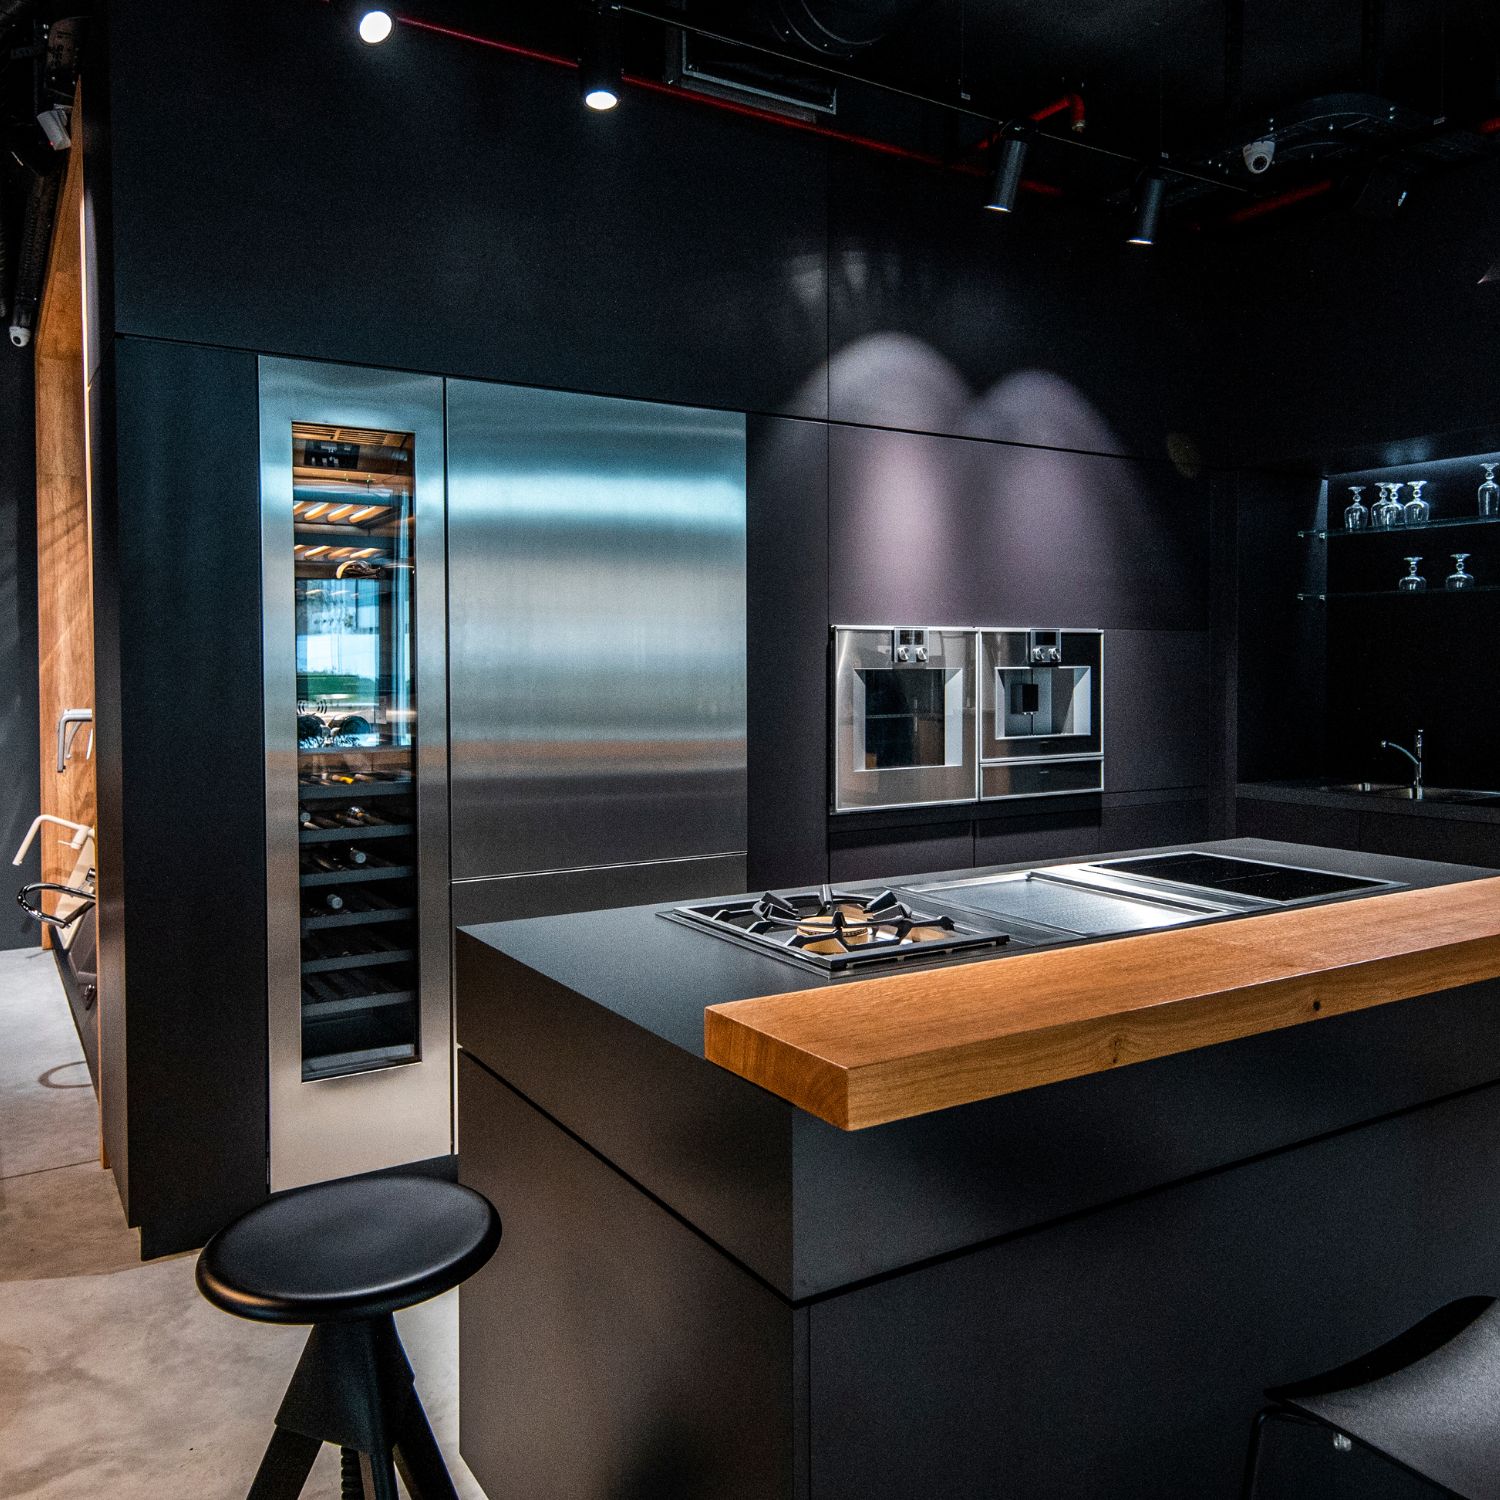 Luxury kitchen after renovation